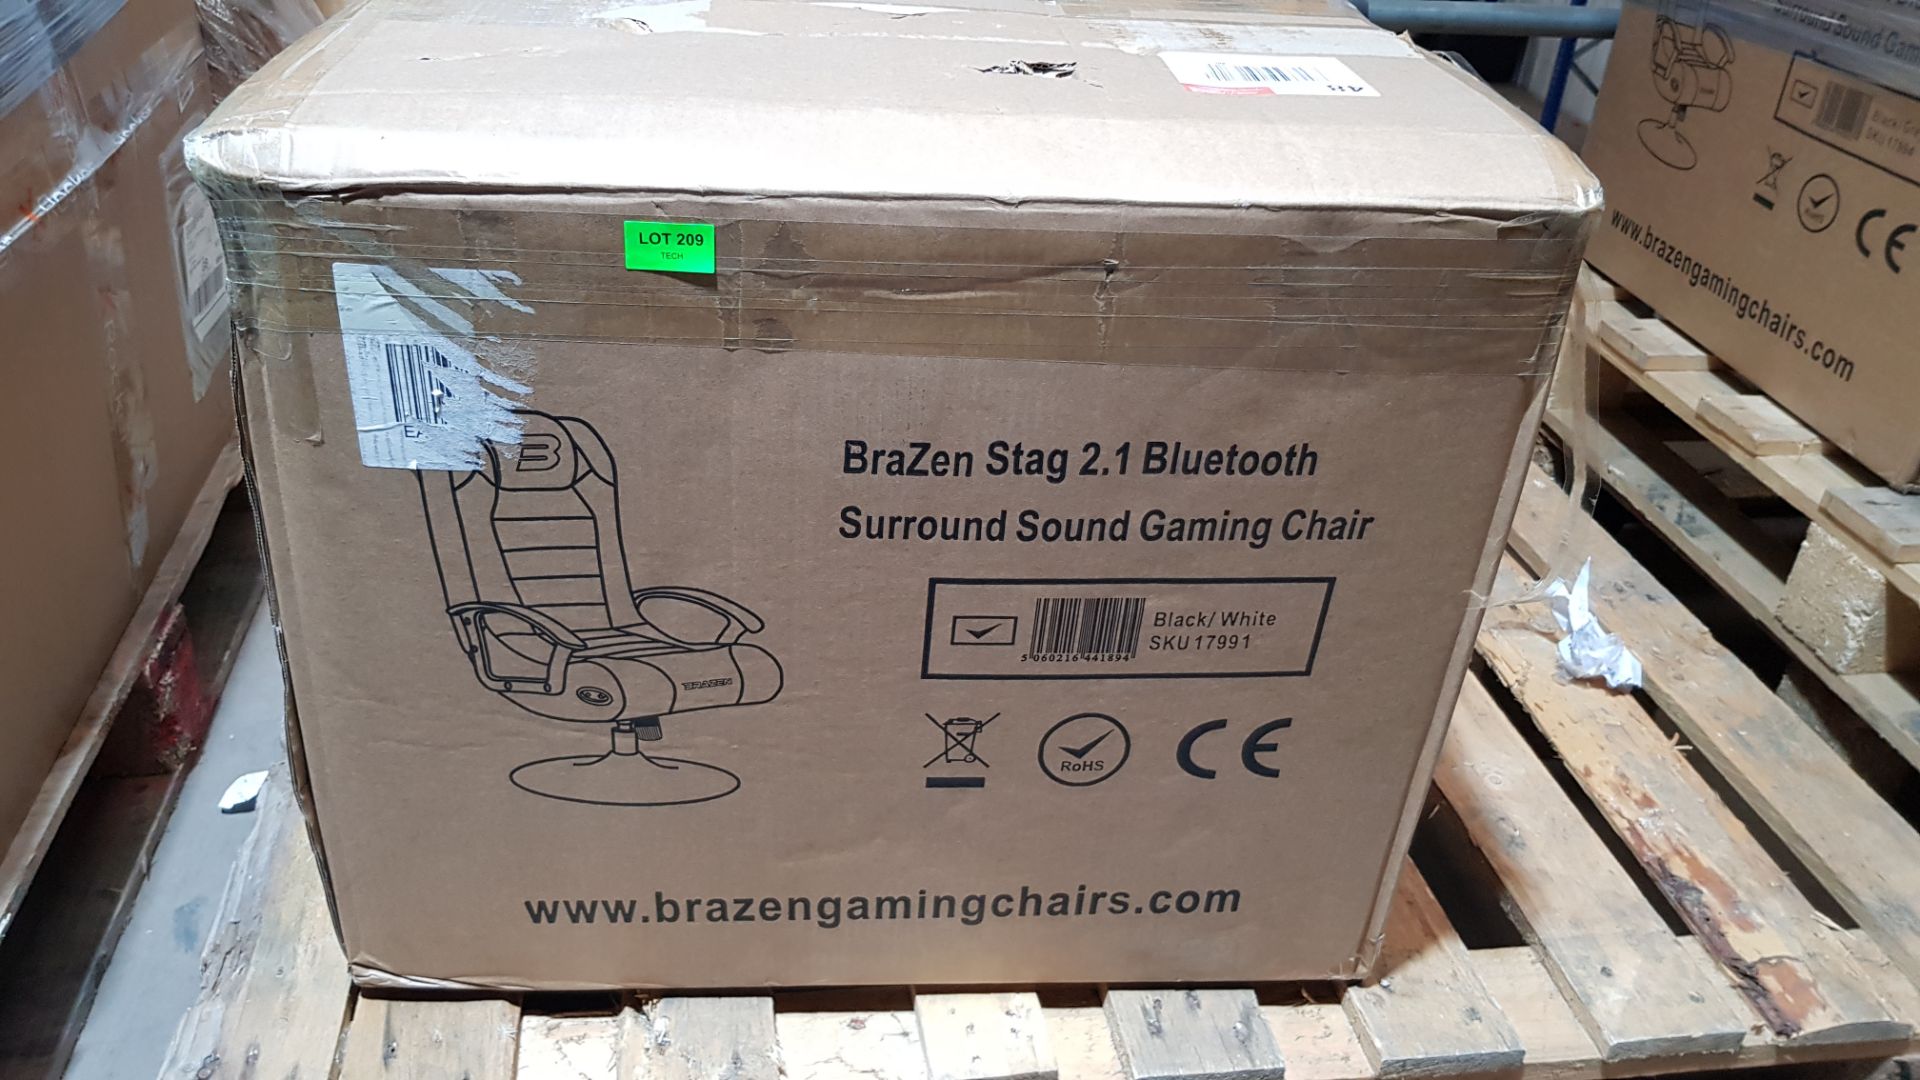 RRP £149. Brazen Stag 2.1 Bluetooth Surround Sound Gaming Chair (Black / White). The BraZen Stag 2. - Image 2 of 3